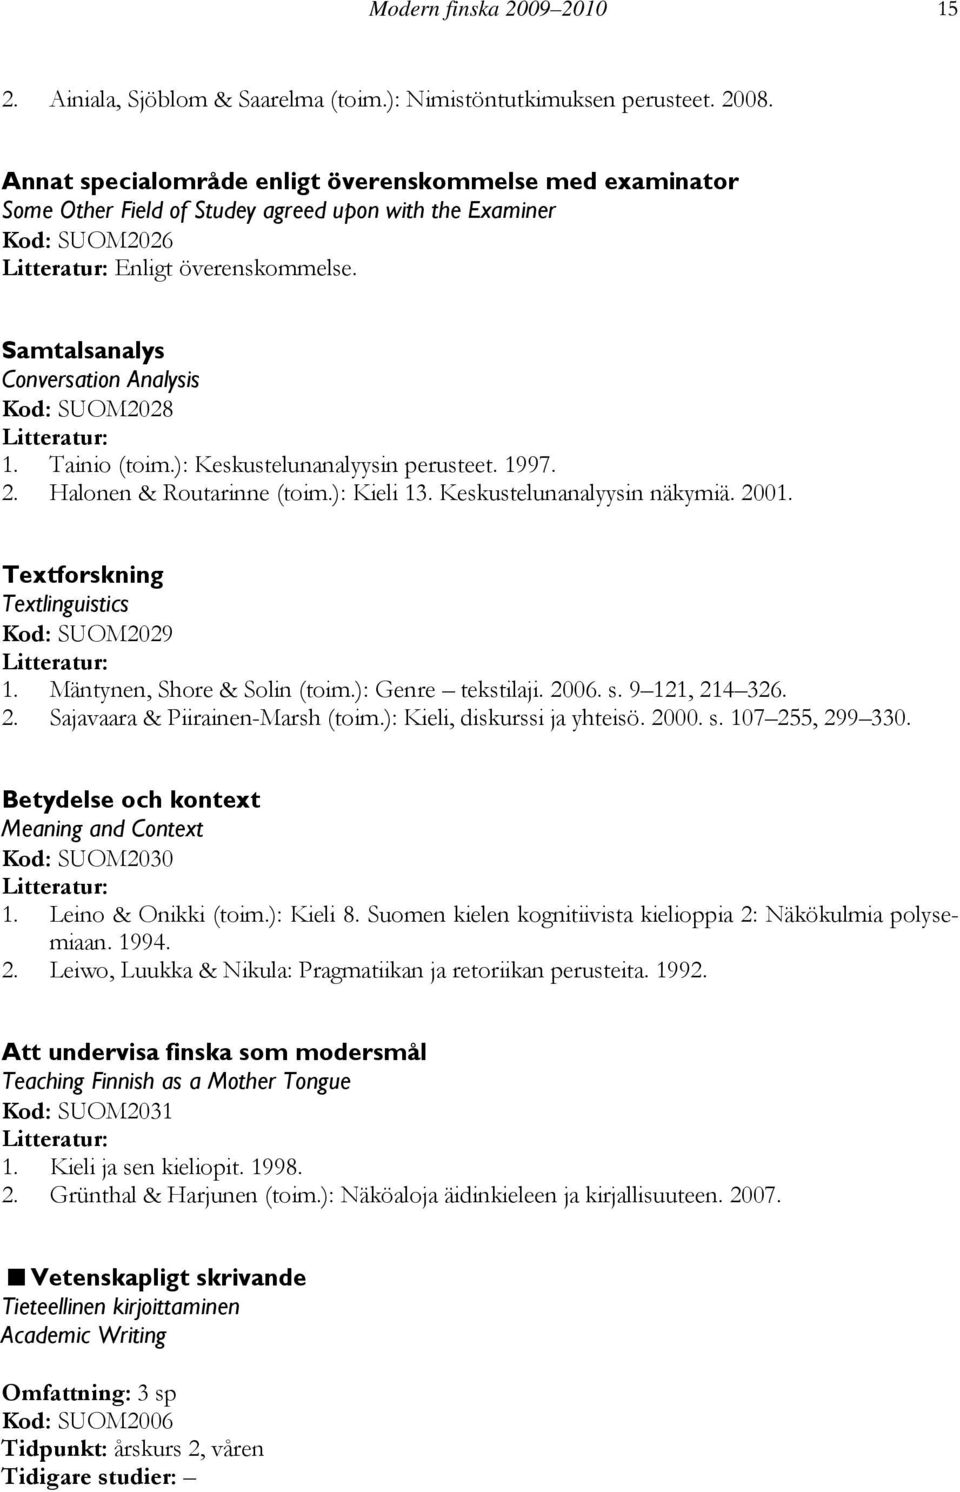 Samtalsanalys Conversation Analysis Kod: SUOM2028 1. Tainio (toim.): Keskustelunanalyysin perusteet. 1997. 2. Halonen & Routarinne (toim.): Kieli 13. Keskustelunanalyysin näkymiä. 2001.